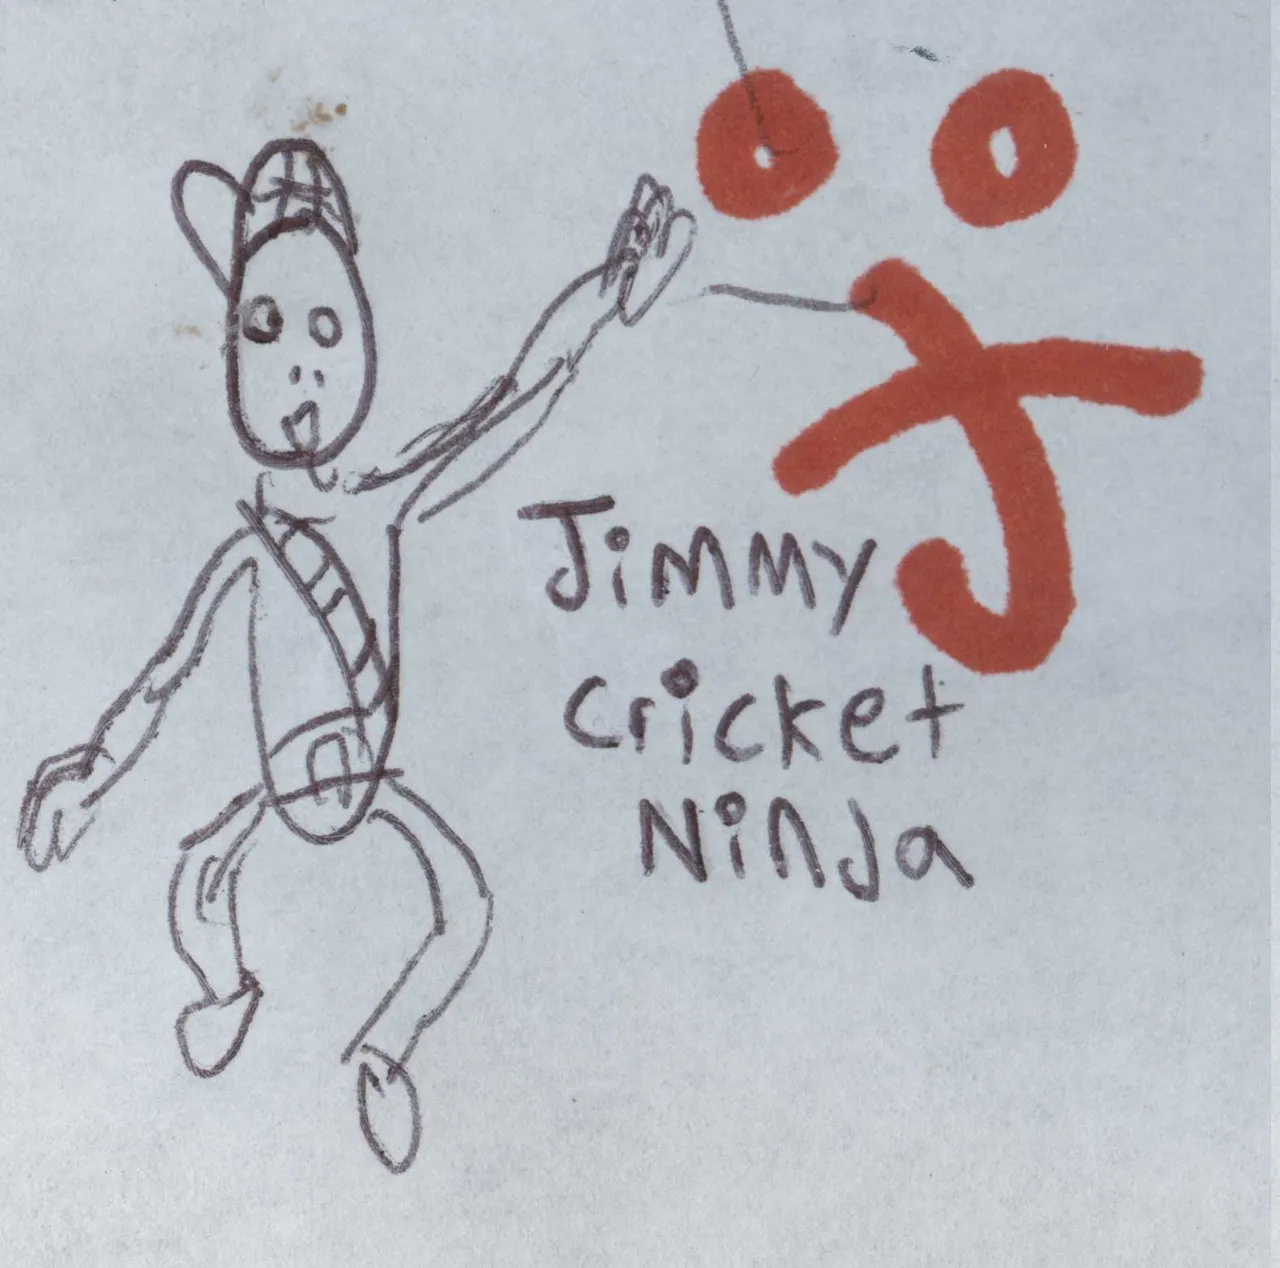 2018-08-12 SUN Jimmy Cricket Ninja-2.jpg